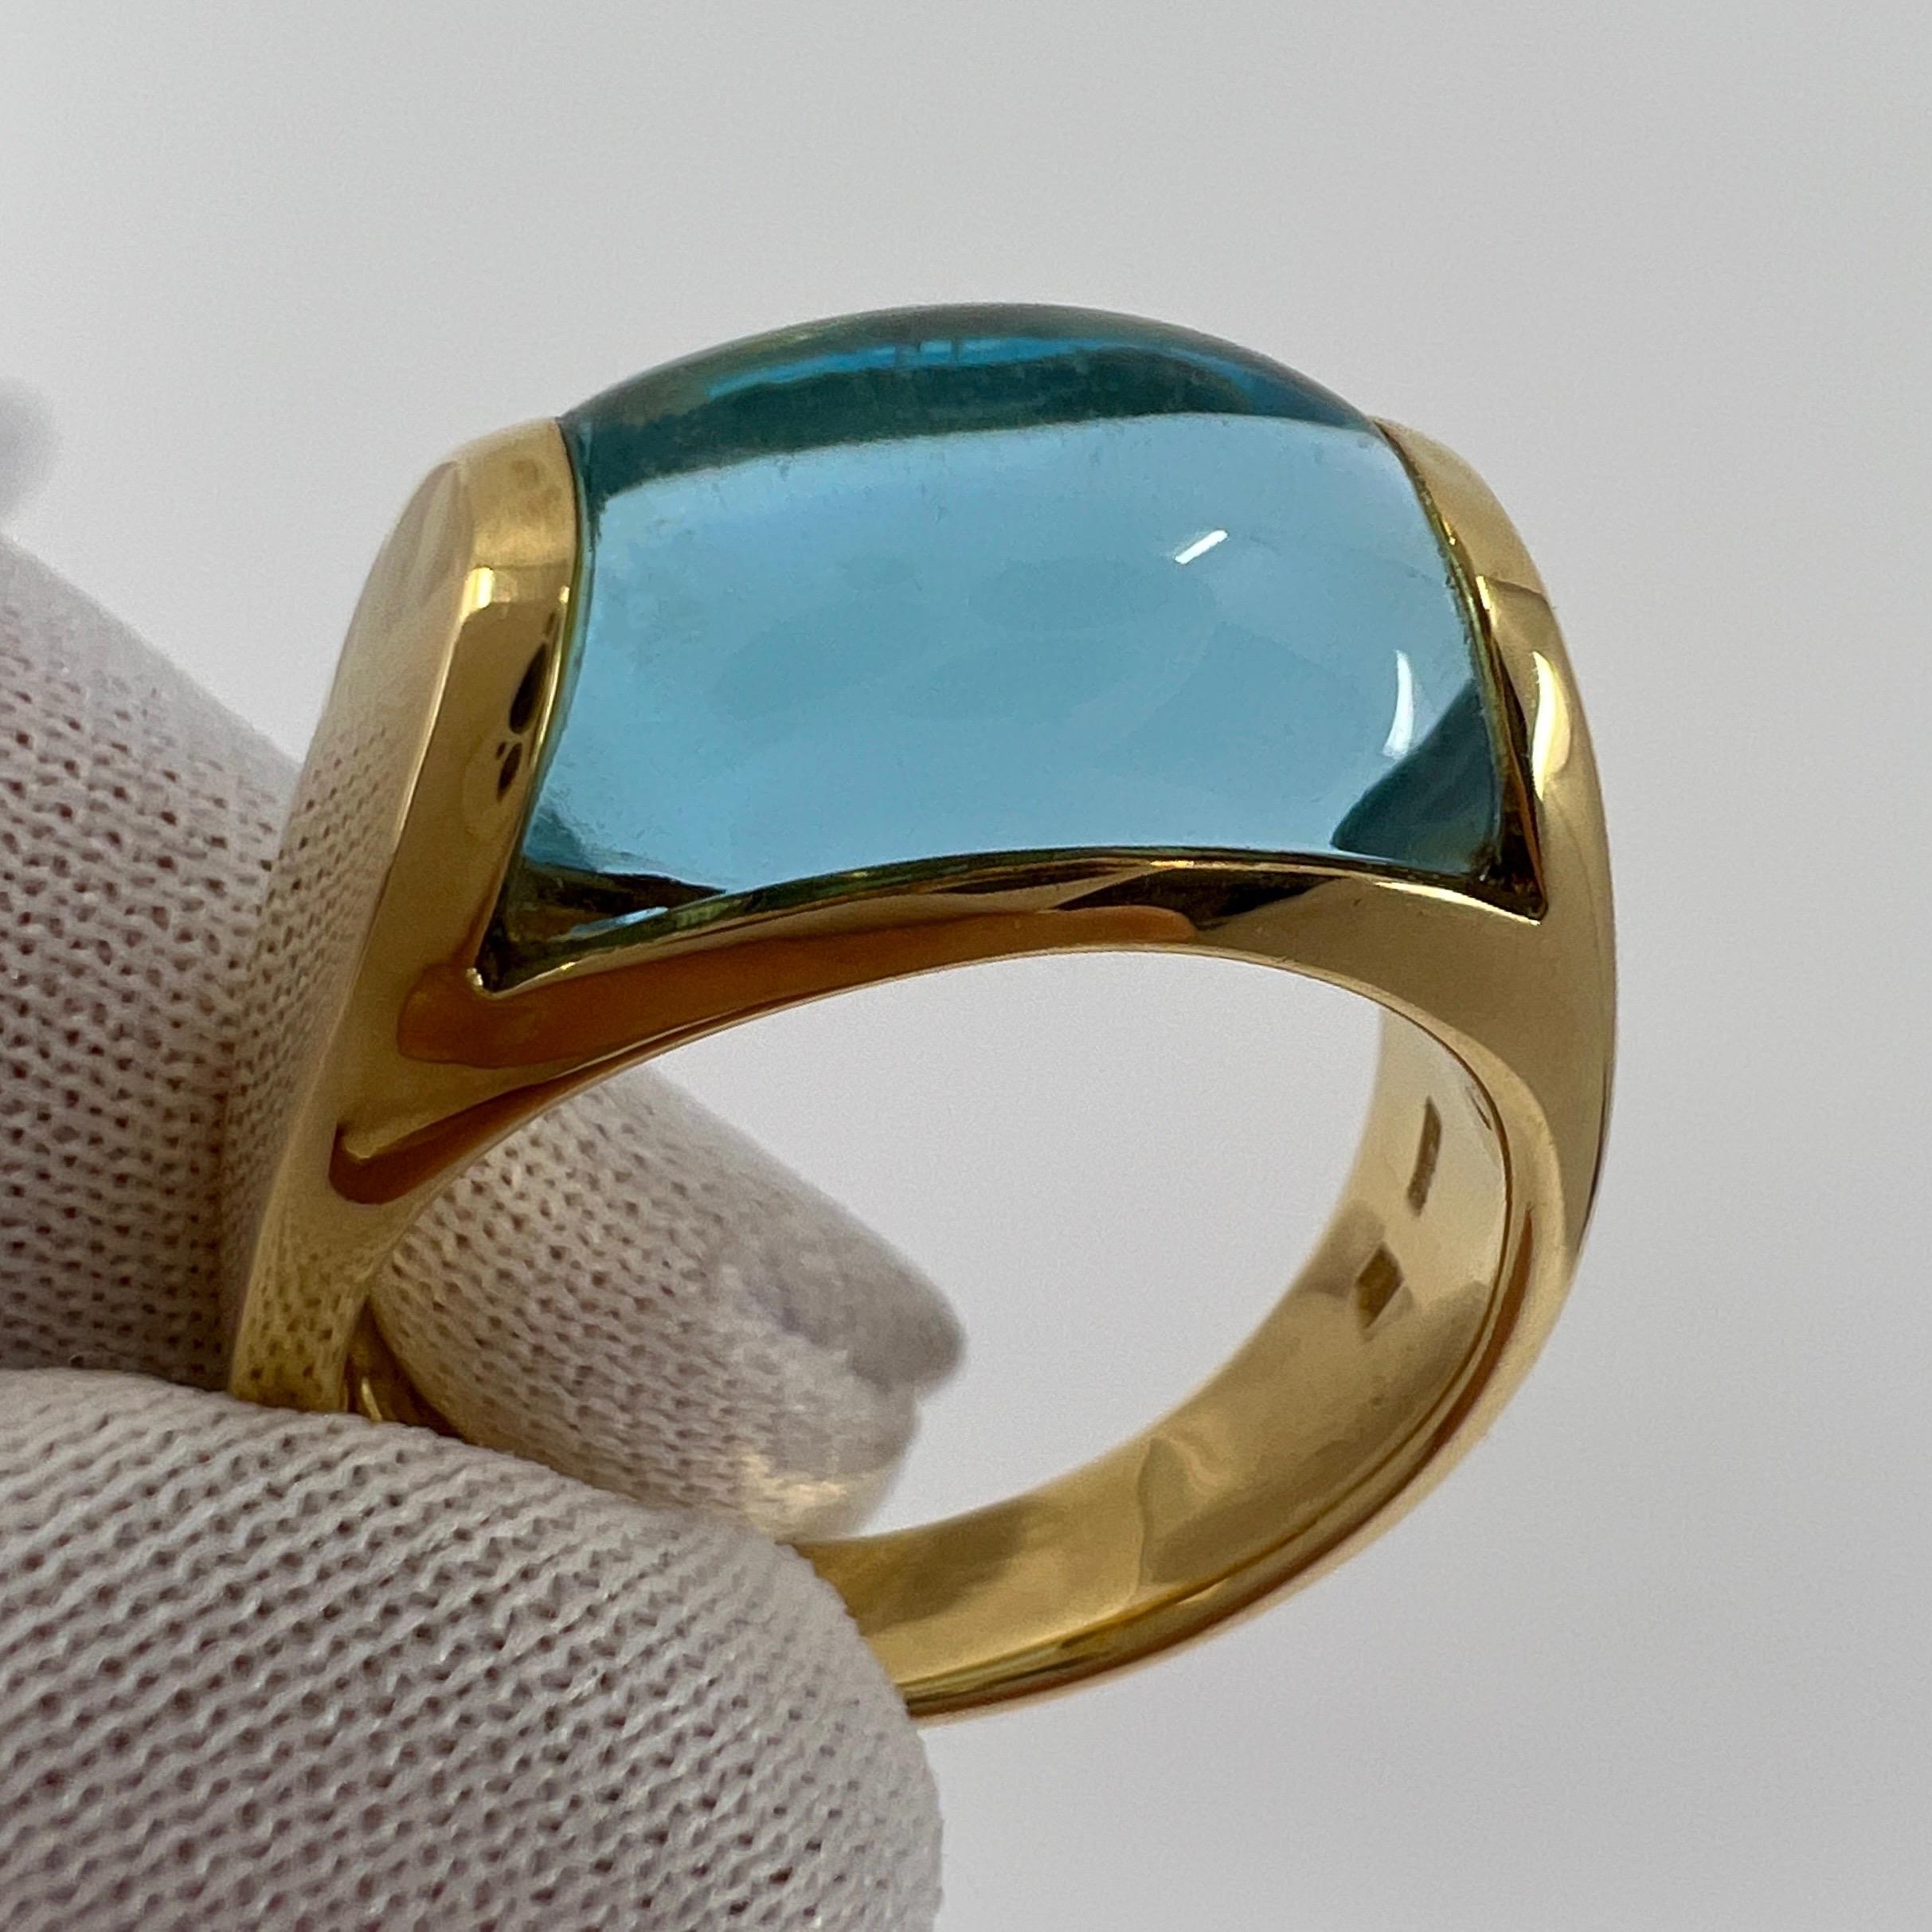 Vintage Bvlgari Tronchetto 18k Yellow Gold Blue Topaz Dome Ring with Box 1